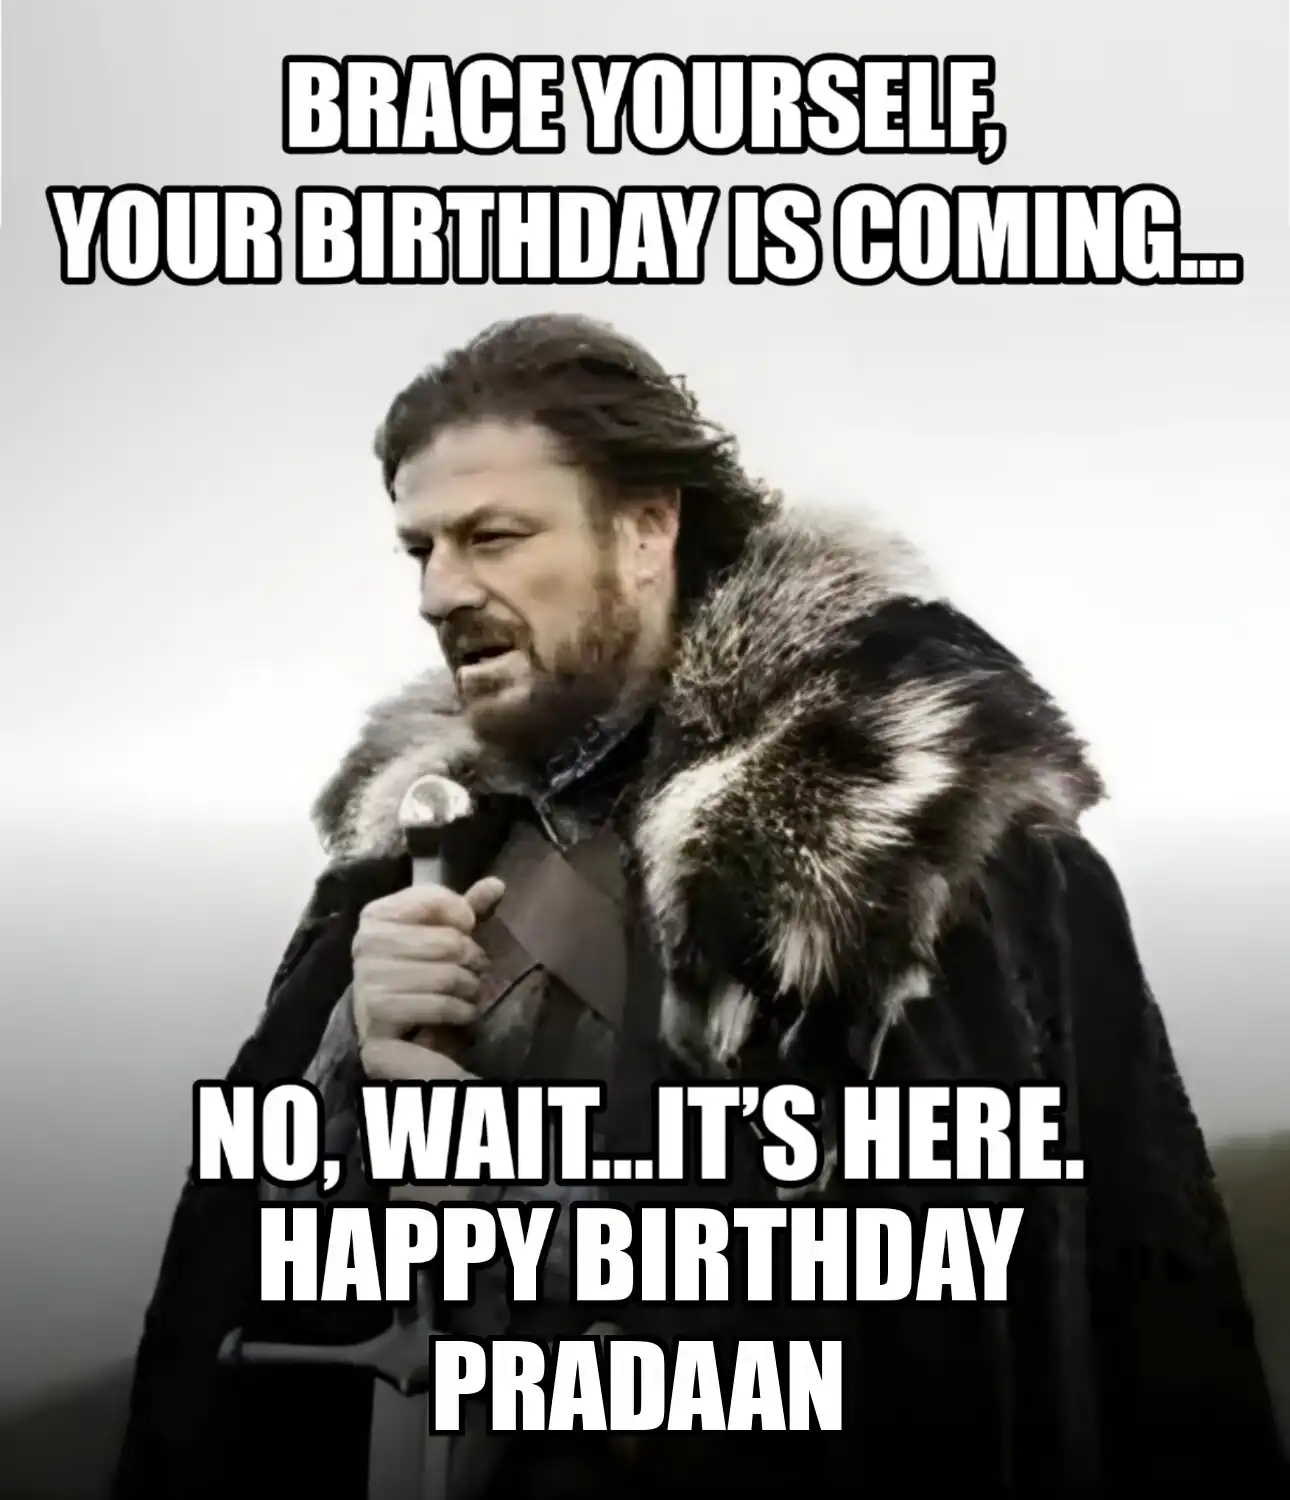 Happy Birthday Pradaan Brace Yourself Your Birthday Is Coming Meme